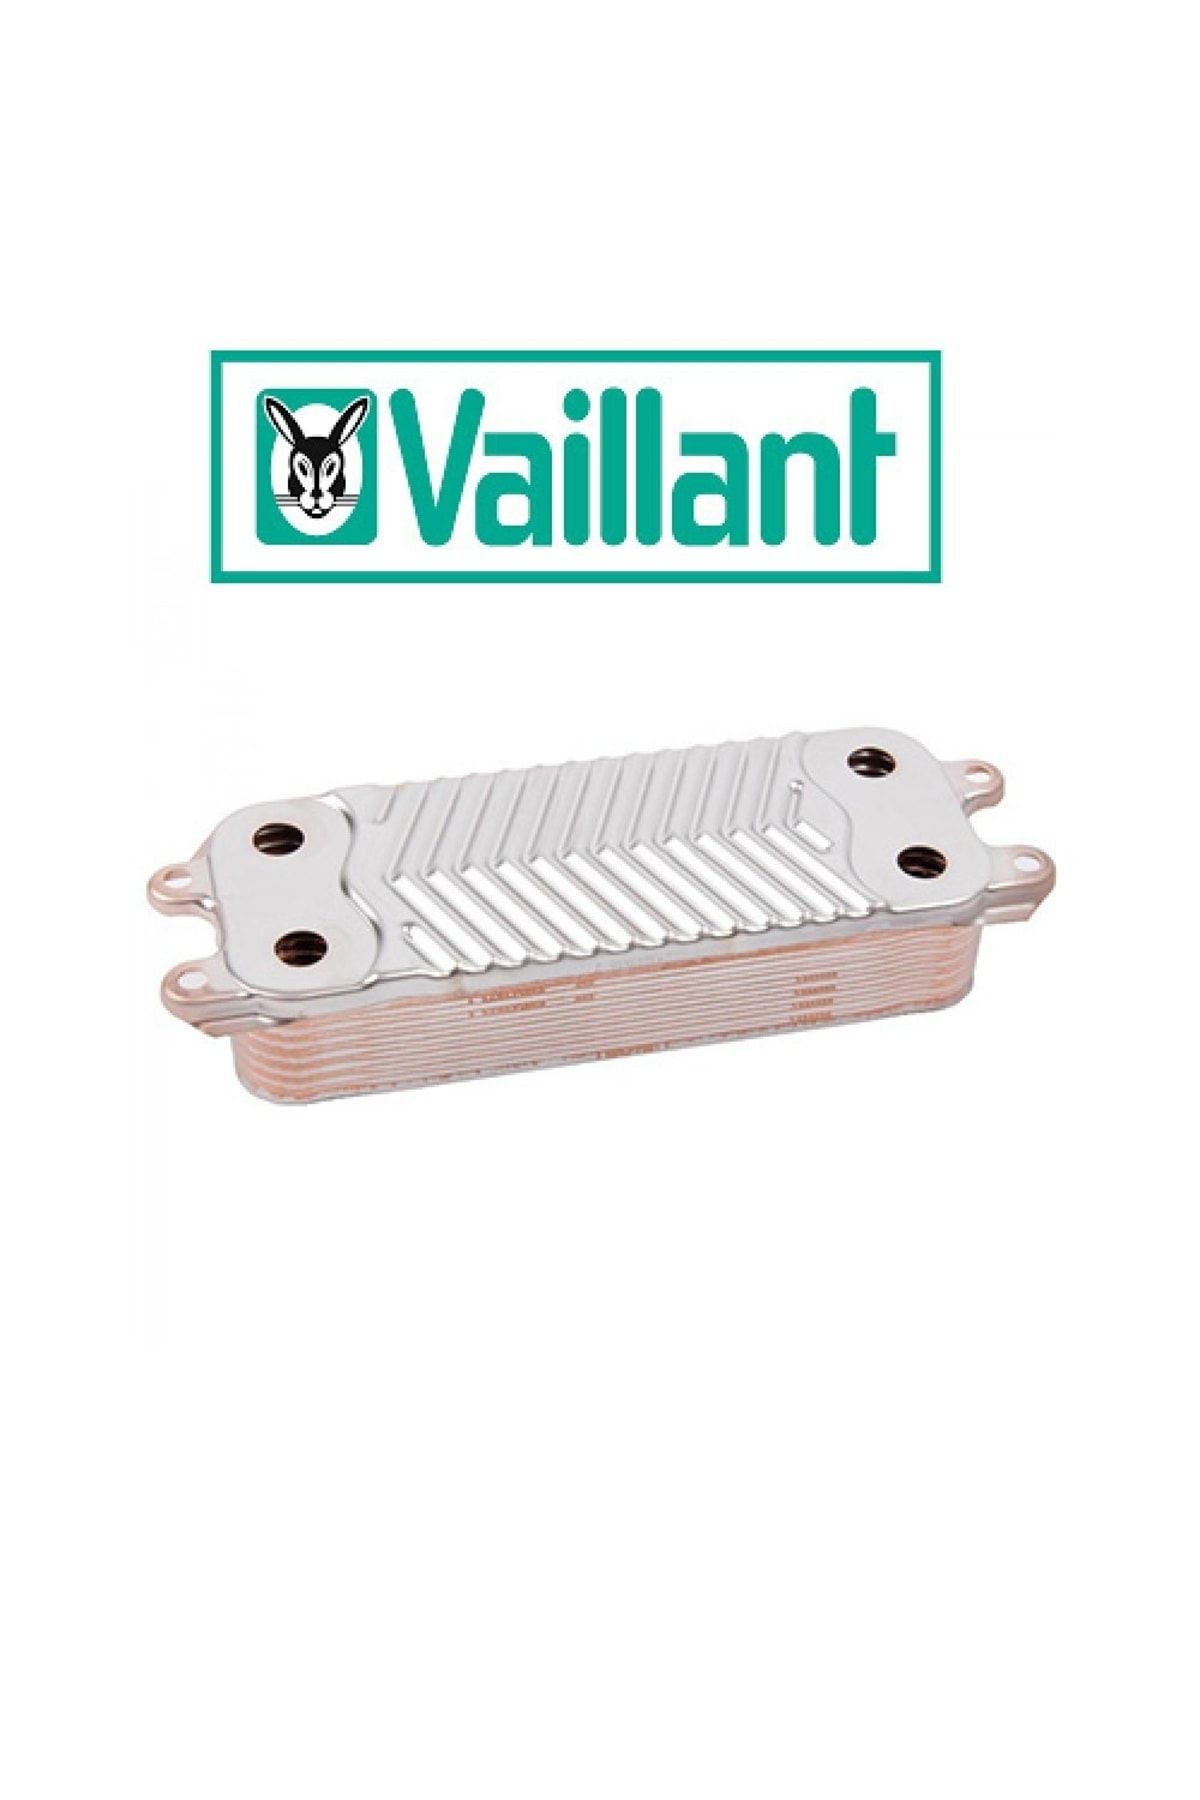 Vaillant Turbotech Kombi 16 Plakalı Eşanjör Özdinamik Mühendislik